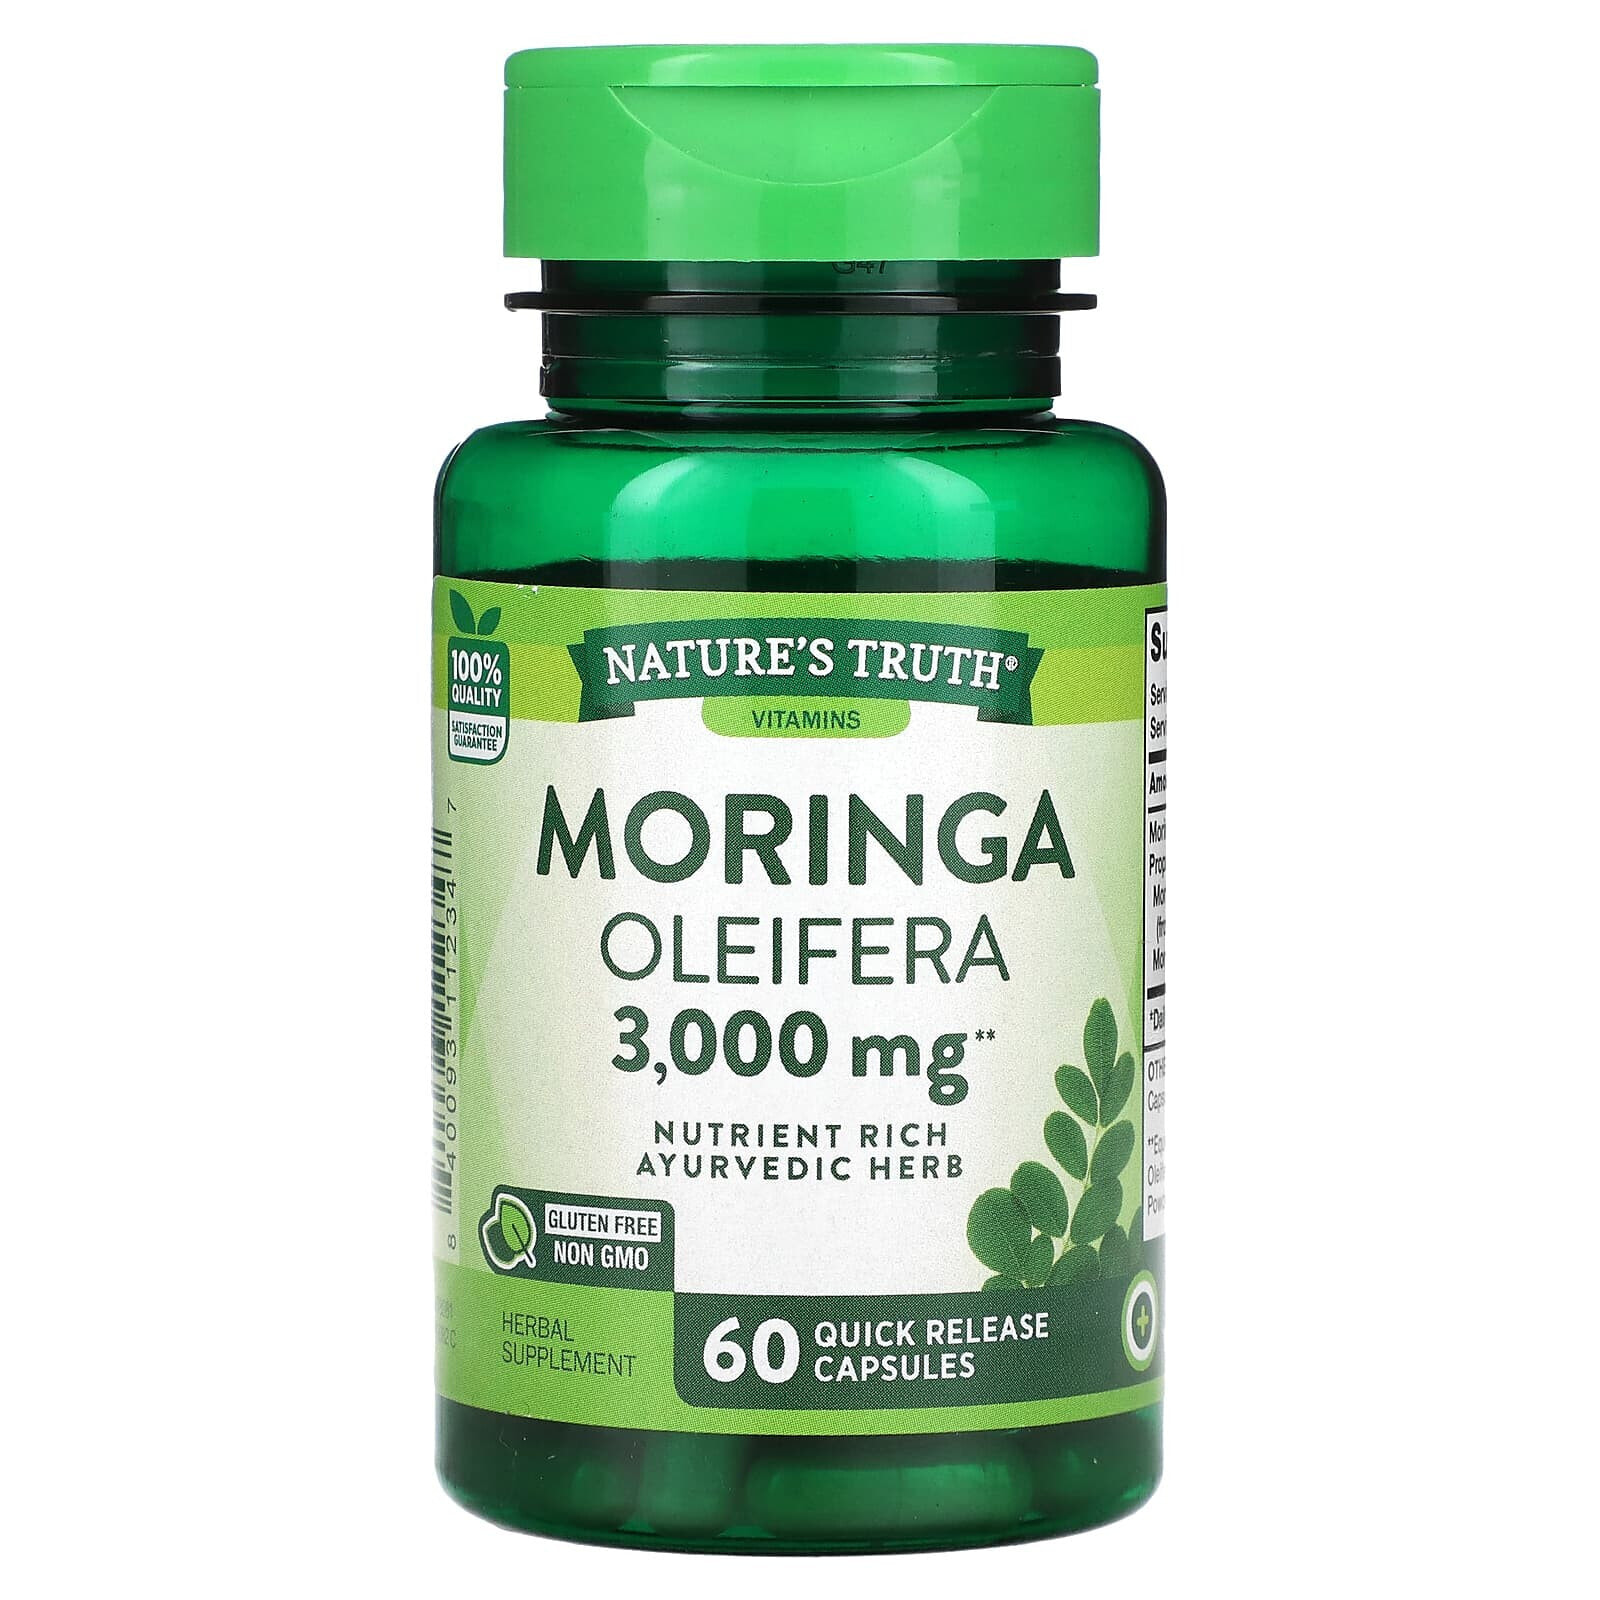 Moringa Oleifera, 3,000 mg, 60 Quick Release Capsules